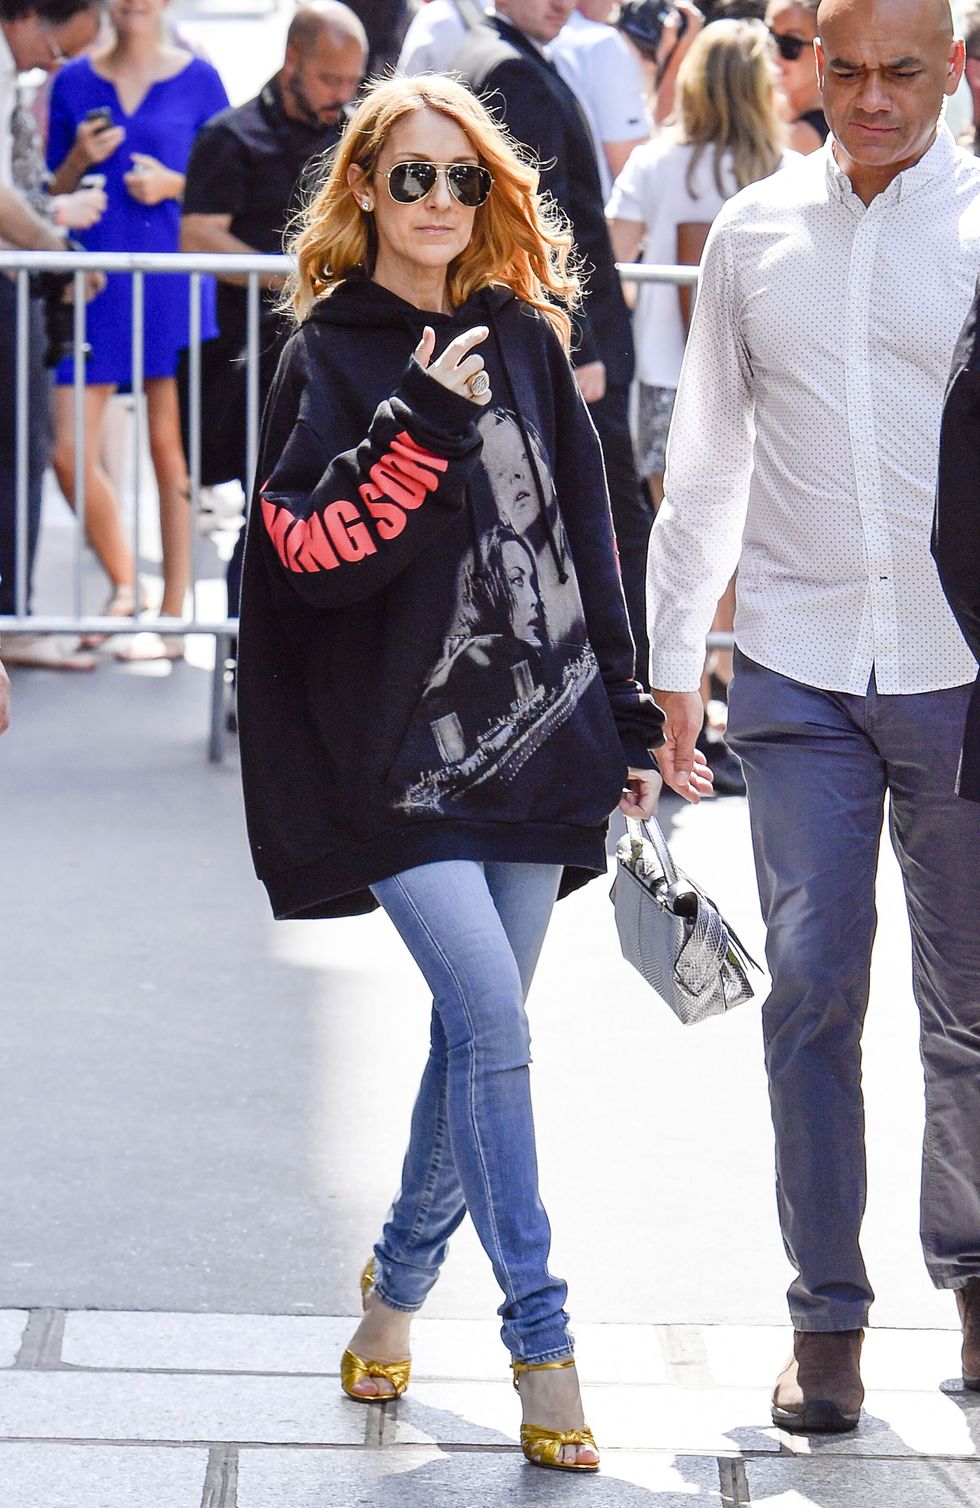 Celine Dion Titanic Sweatshirt - Celine Dion Fashion